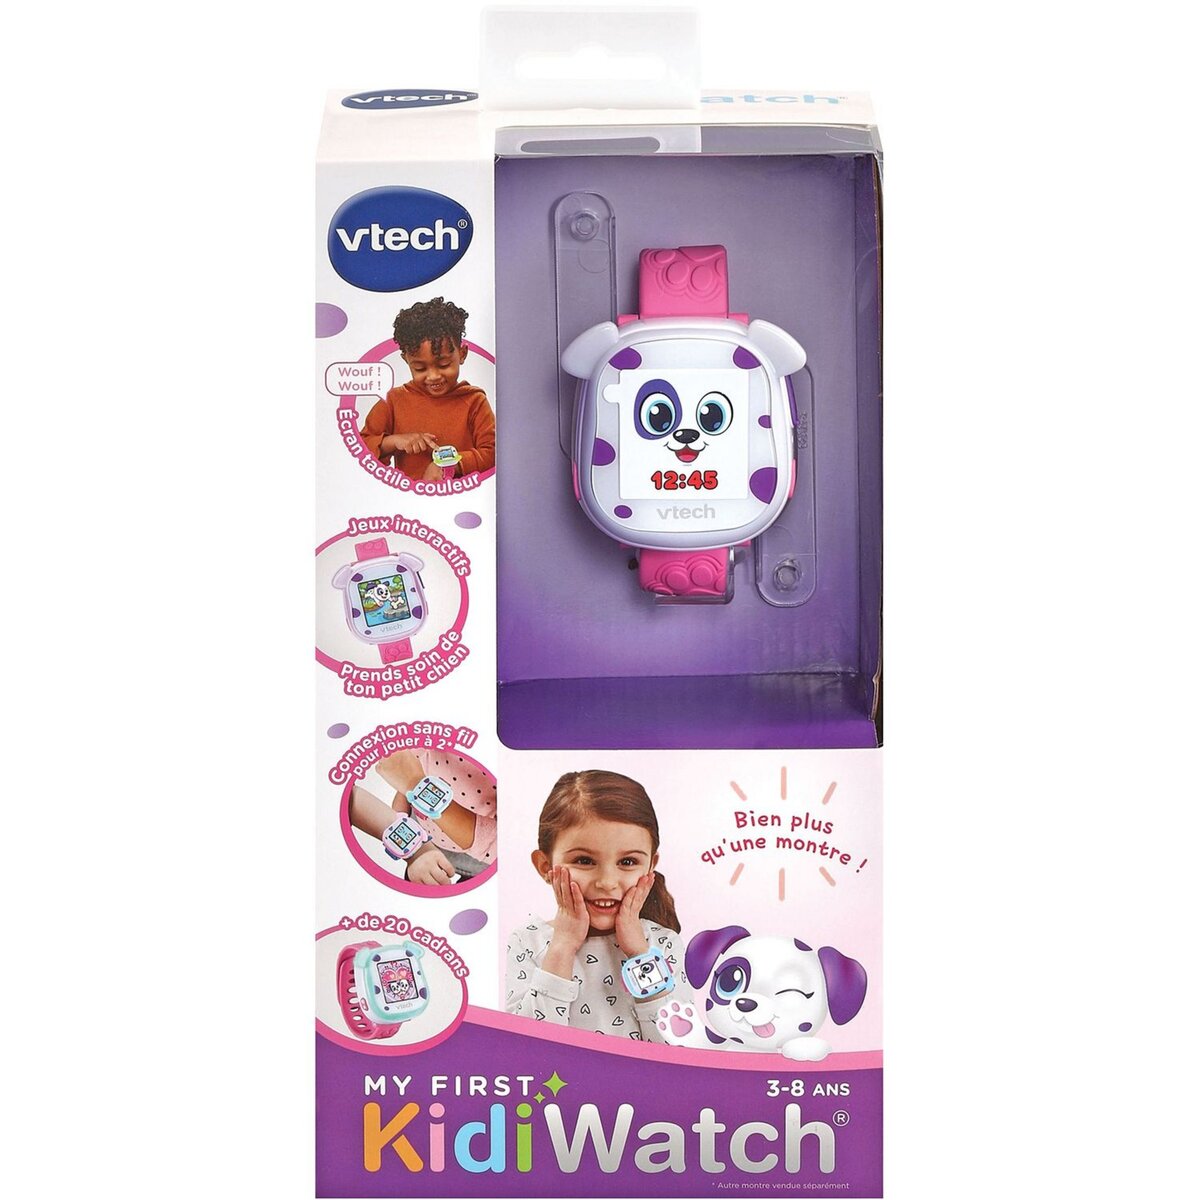 VTECH Kidizoom Smartwatch DX2 Rose pas cher 